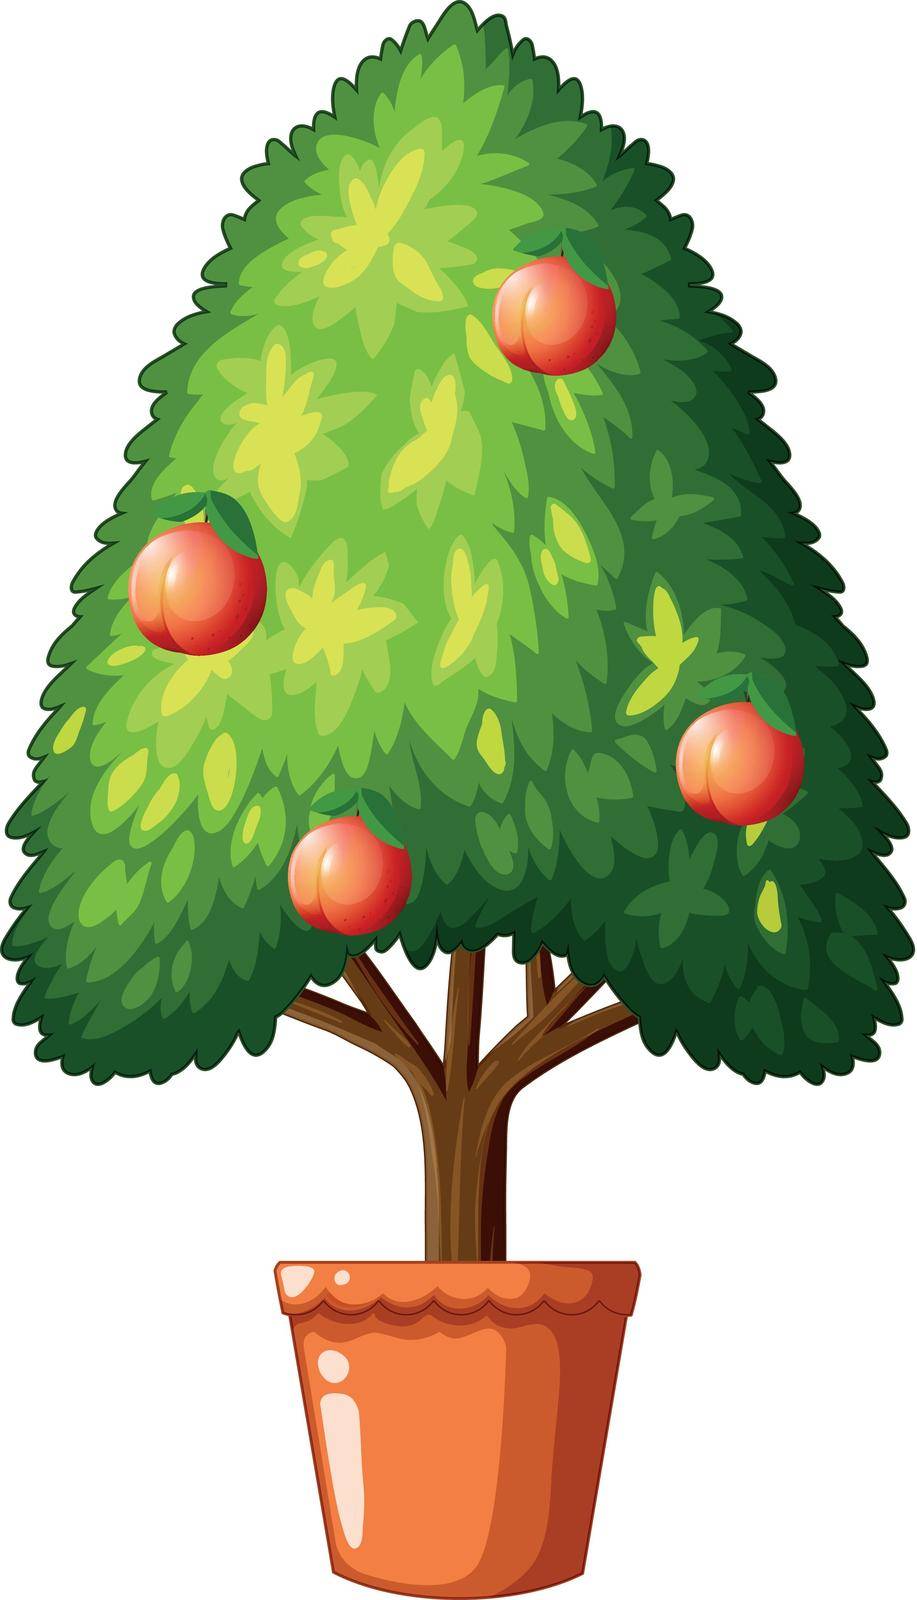 Peach tree in claypot illustration